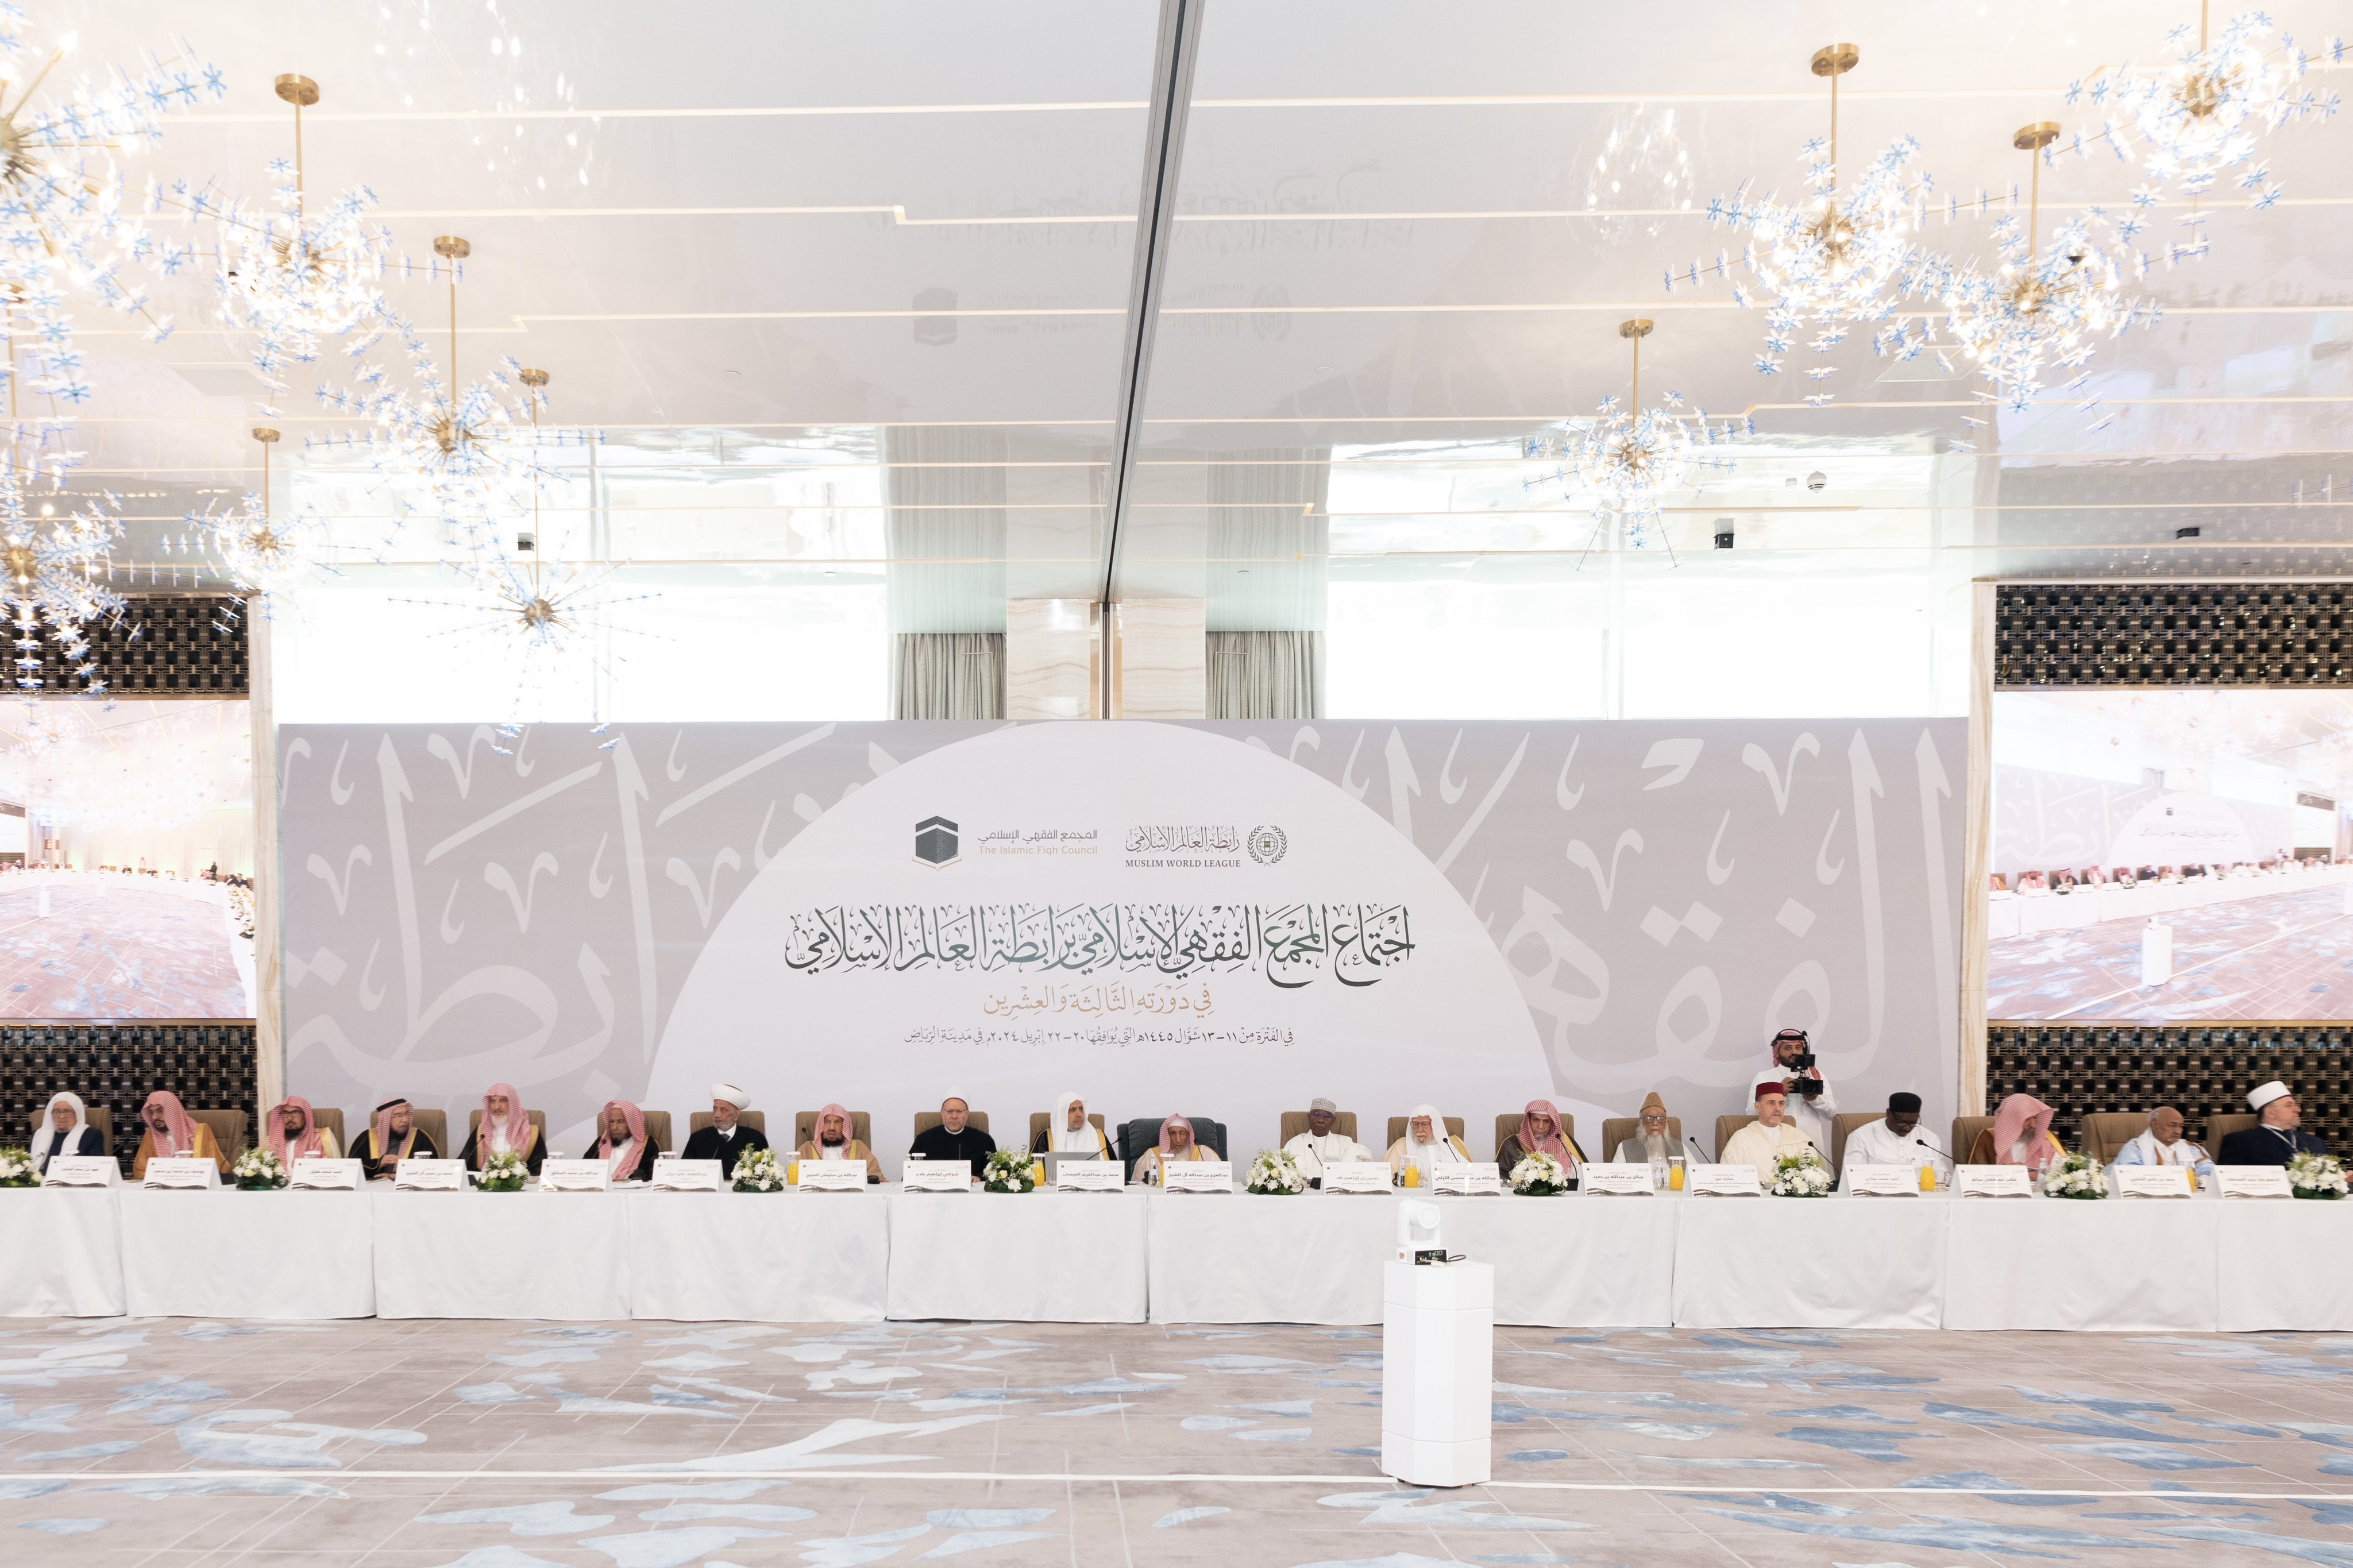 Dimulainya acara sesi ke-23 dari “Akademi Fikih Islam”, yang berafiliasi dengan #LigaMuslimDunia, di hadapan para Mufti dan ulama terkemuka dunia Islam dan negara-negara minoritas